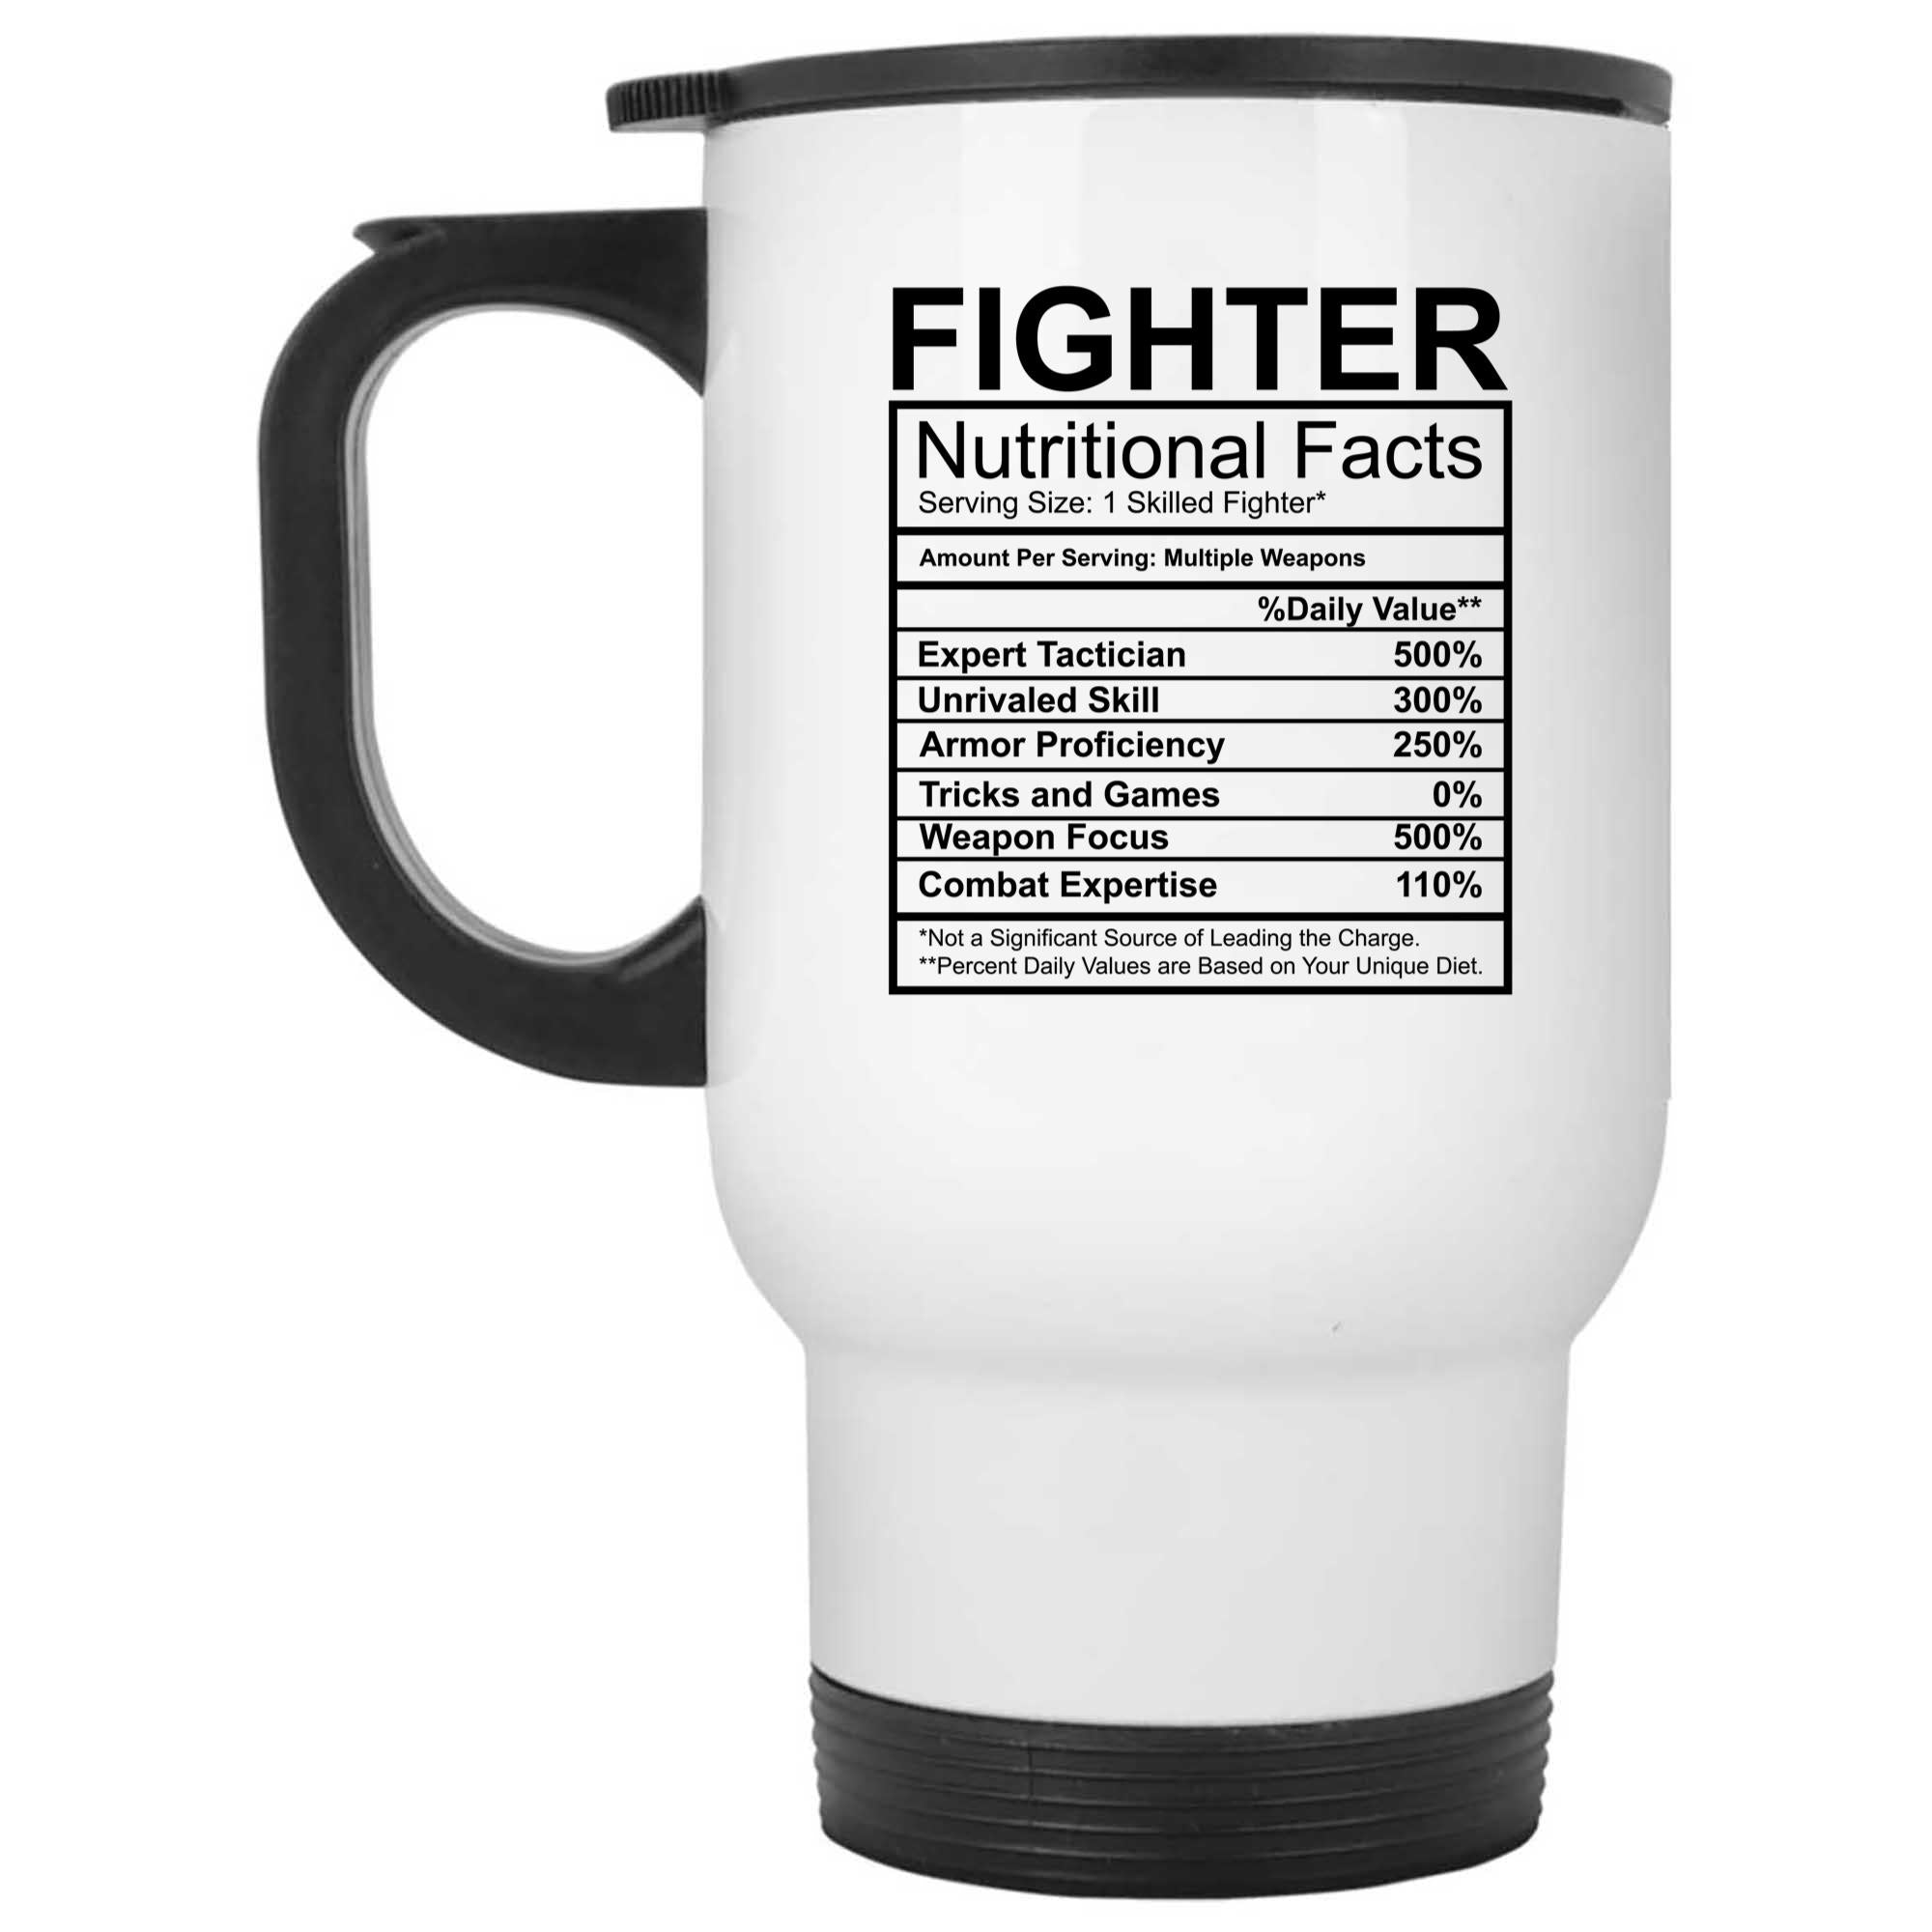 Skitongifts Funny Ceramic Novelty Coffee Mug Fighter Nutritional Facts XcKtBW1